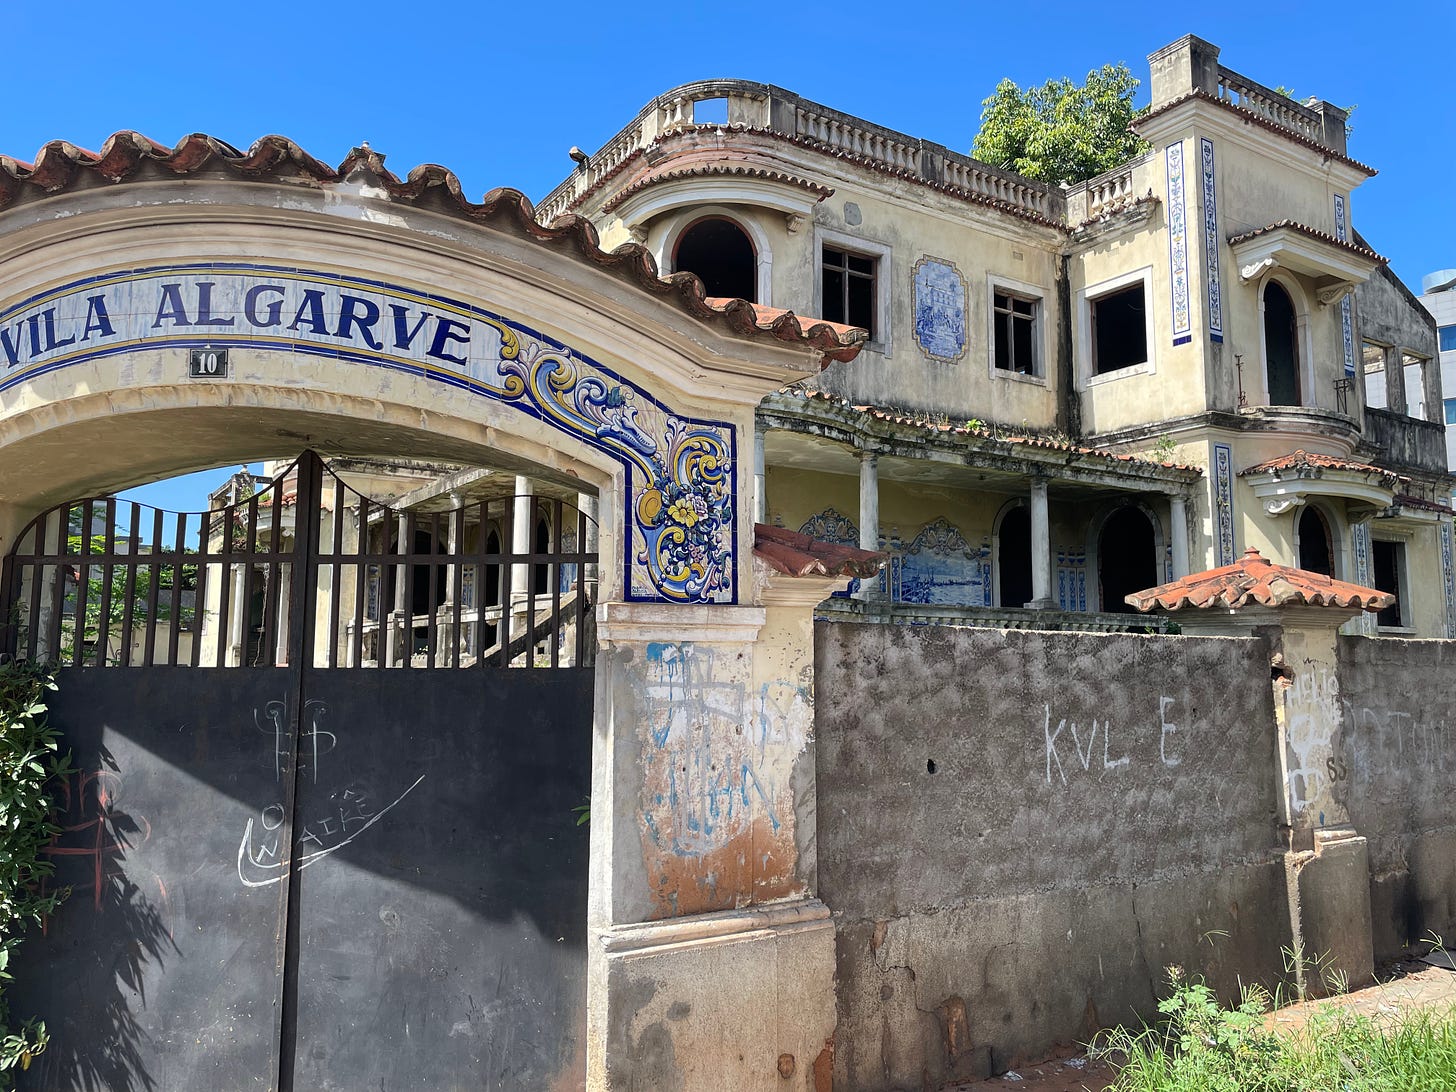 Vila Argarve was a Portuguese torture center in Mozambique in colonial times.